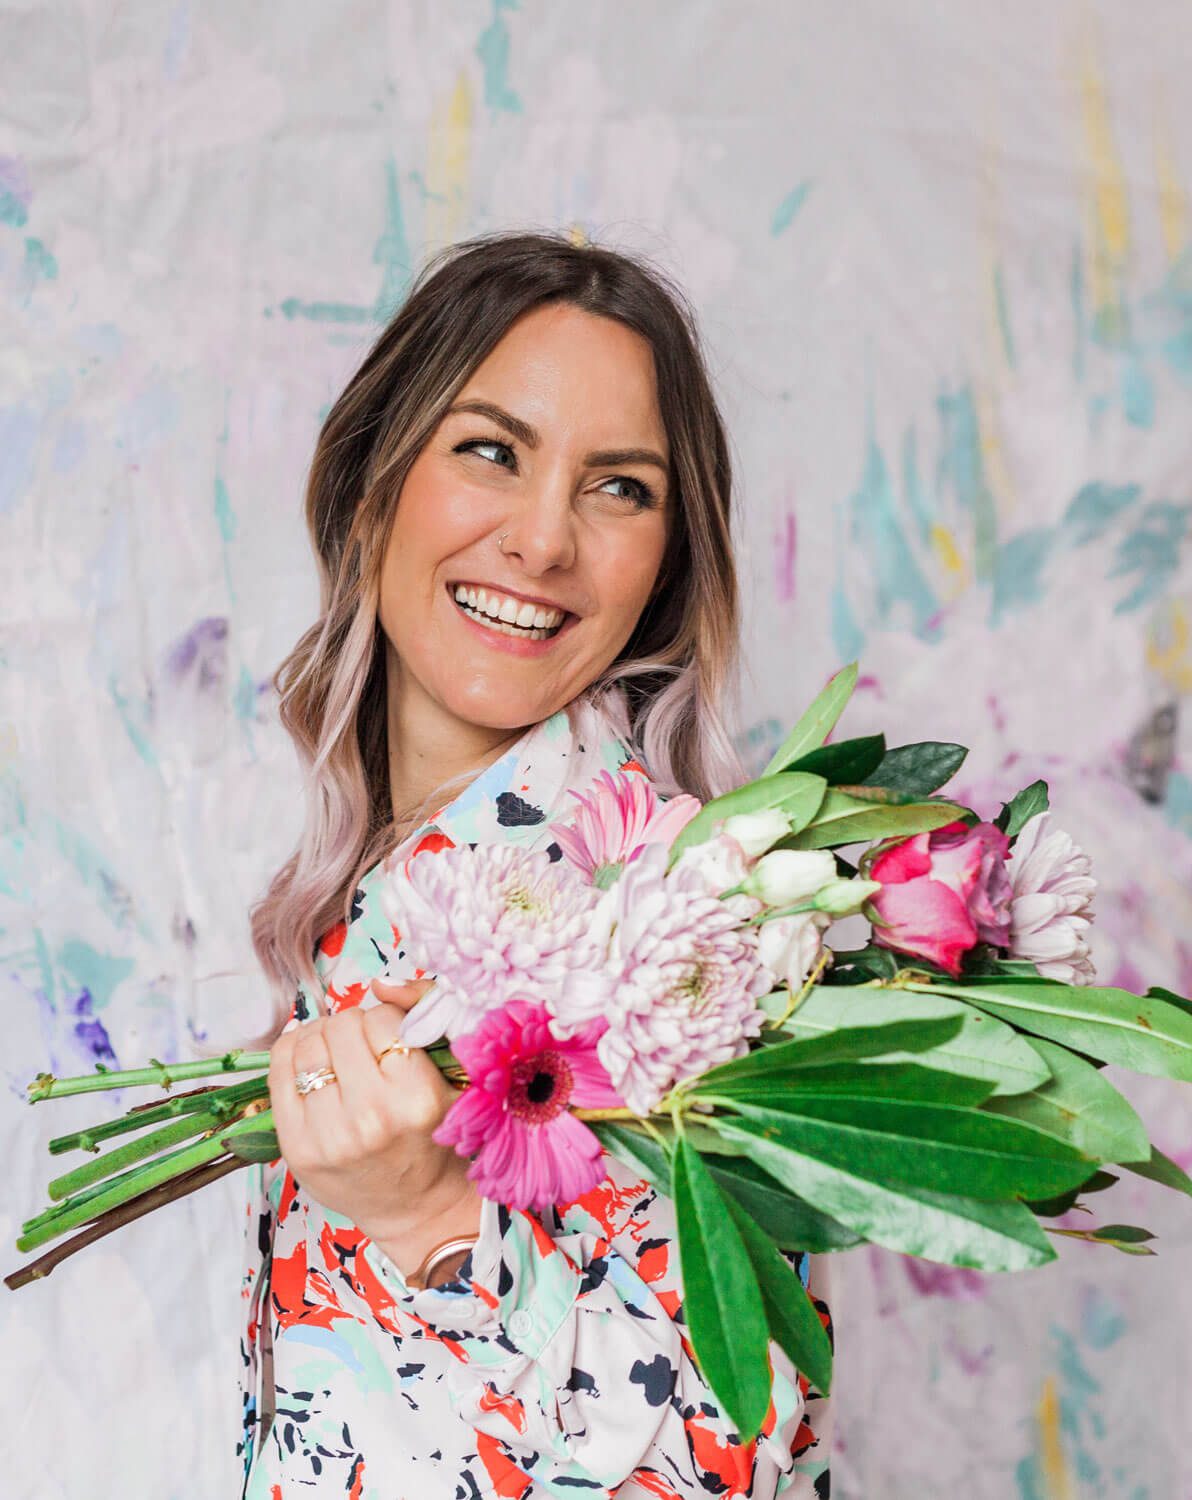 Natasha Floral artist and mentor